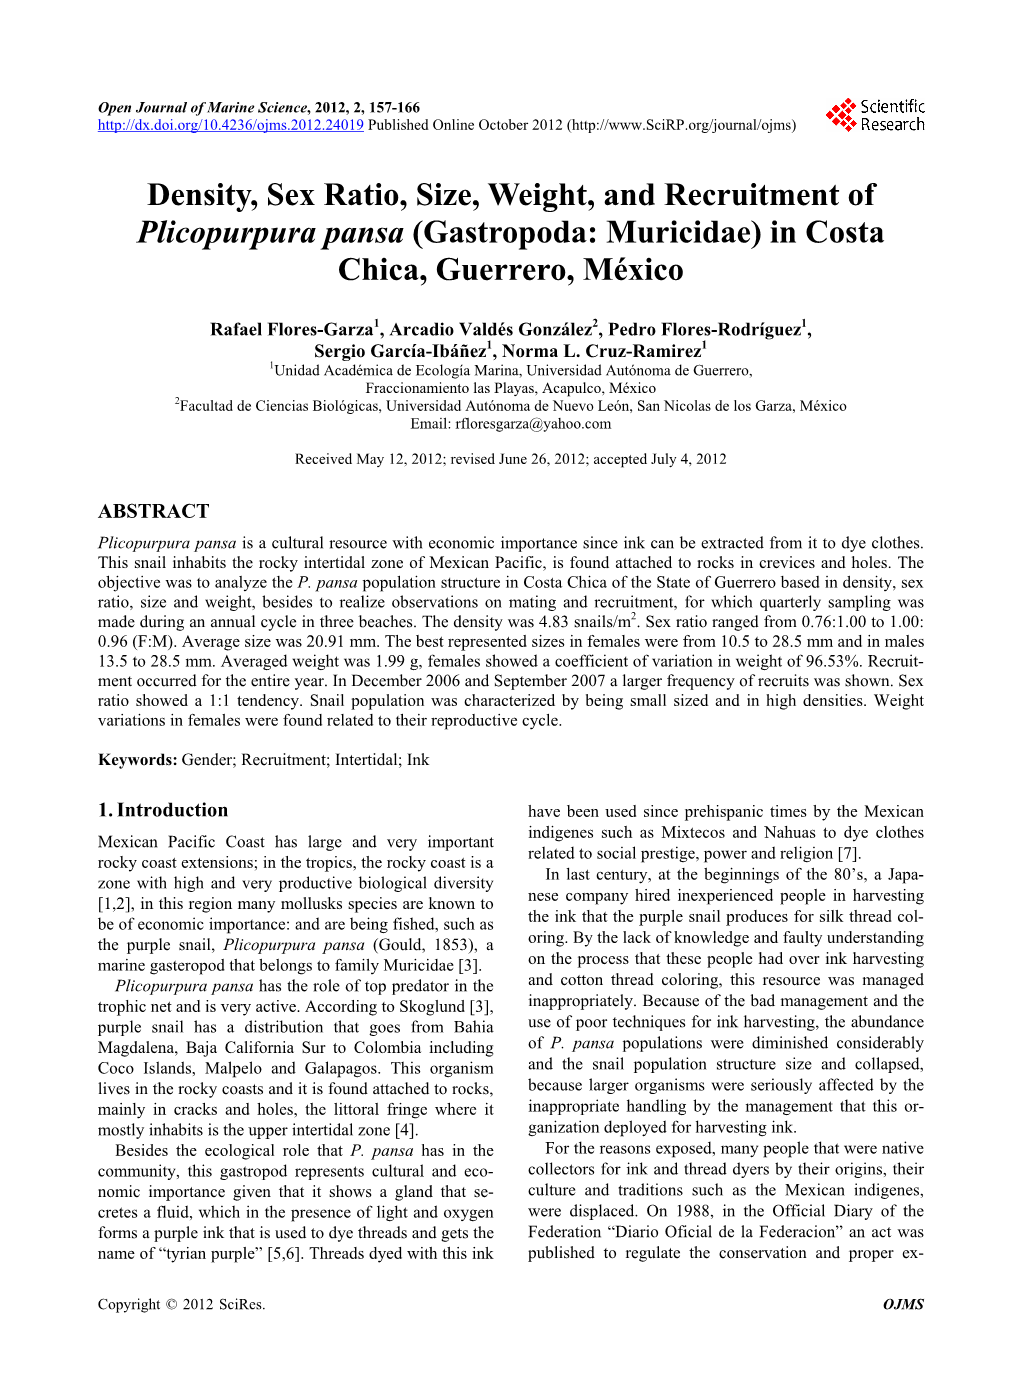 Density, Sex Ratio, Size, Weight, and Recruitment of Plicopurpura Pansa (Gastropoda: Muricidae) in Costa Chica, Guerrero, México